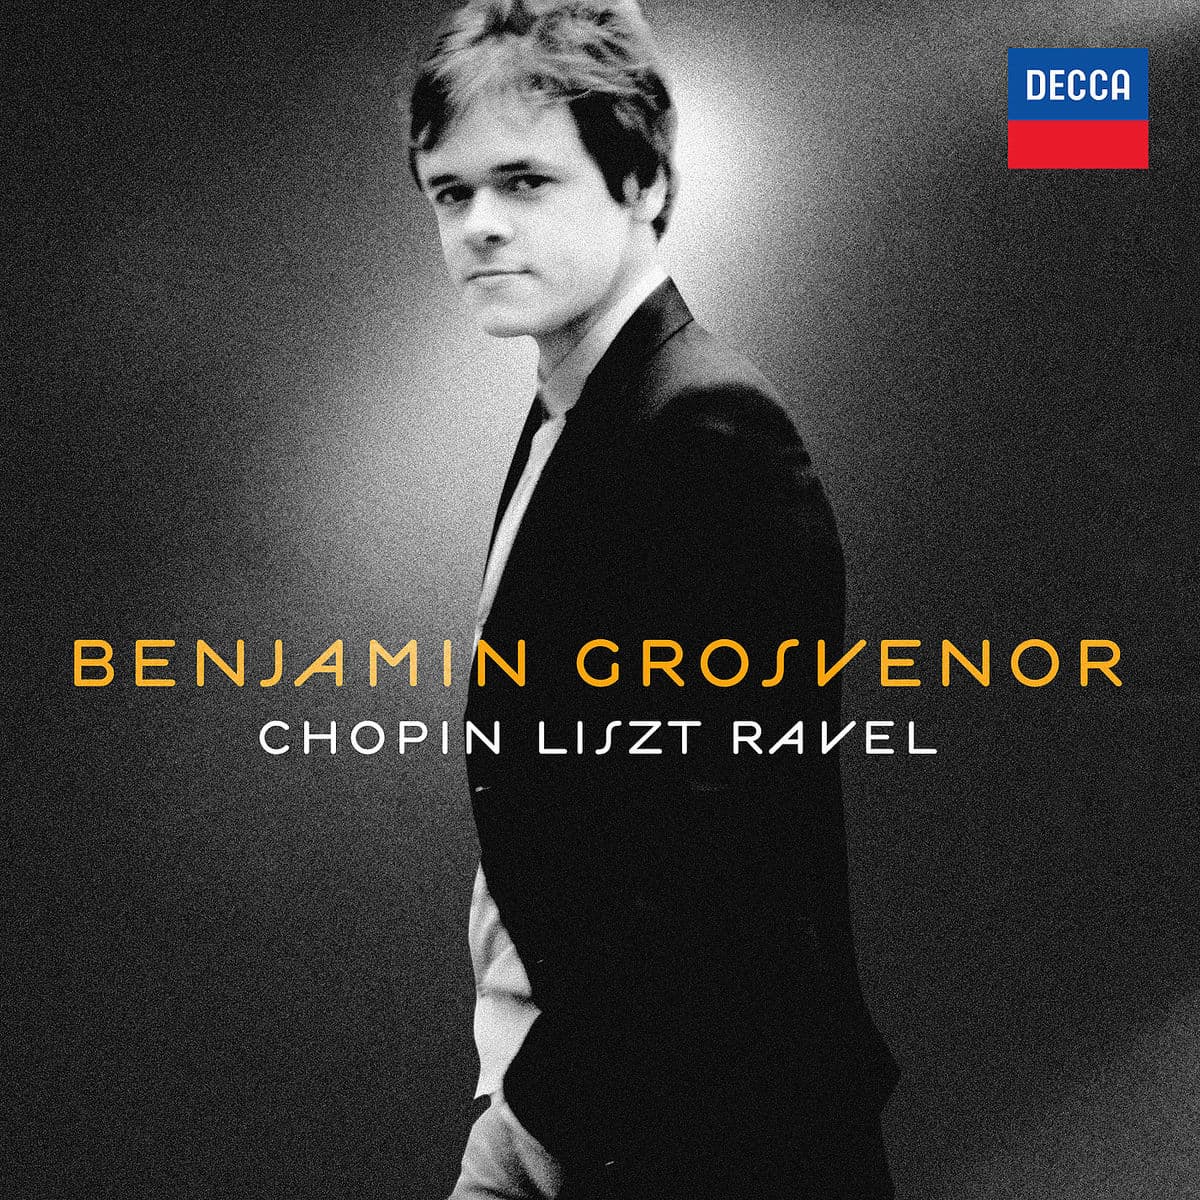 Benjamin Grosvenor: Chopin Liszt Ravel - Presto Music